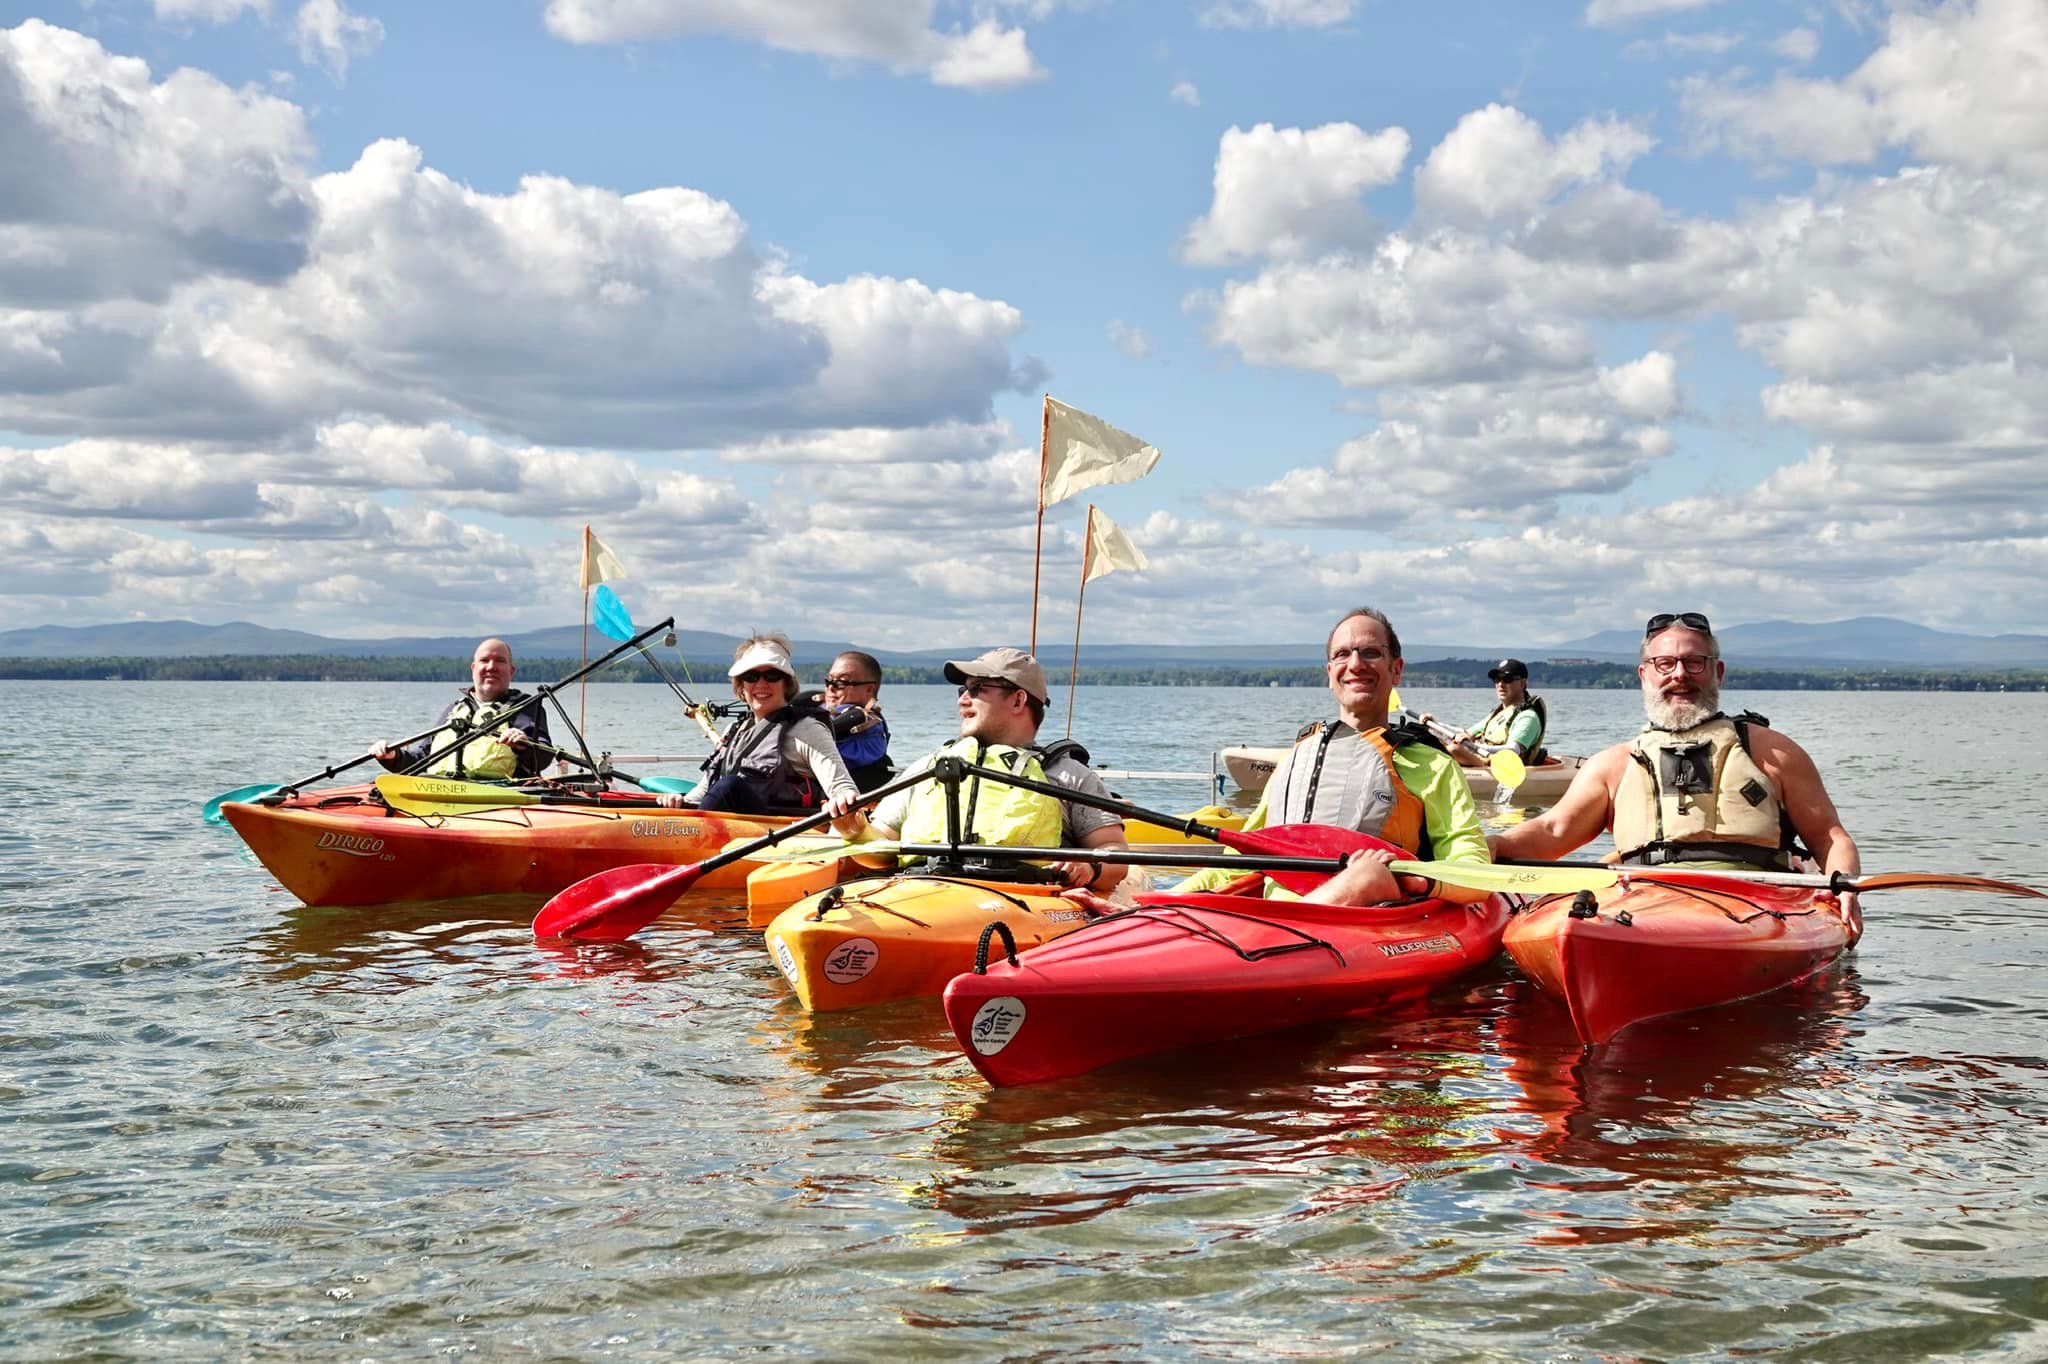 The NDAA Board of Directors in adaptive kayaks on Lake Champlain